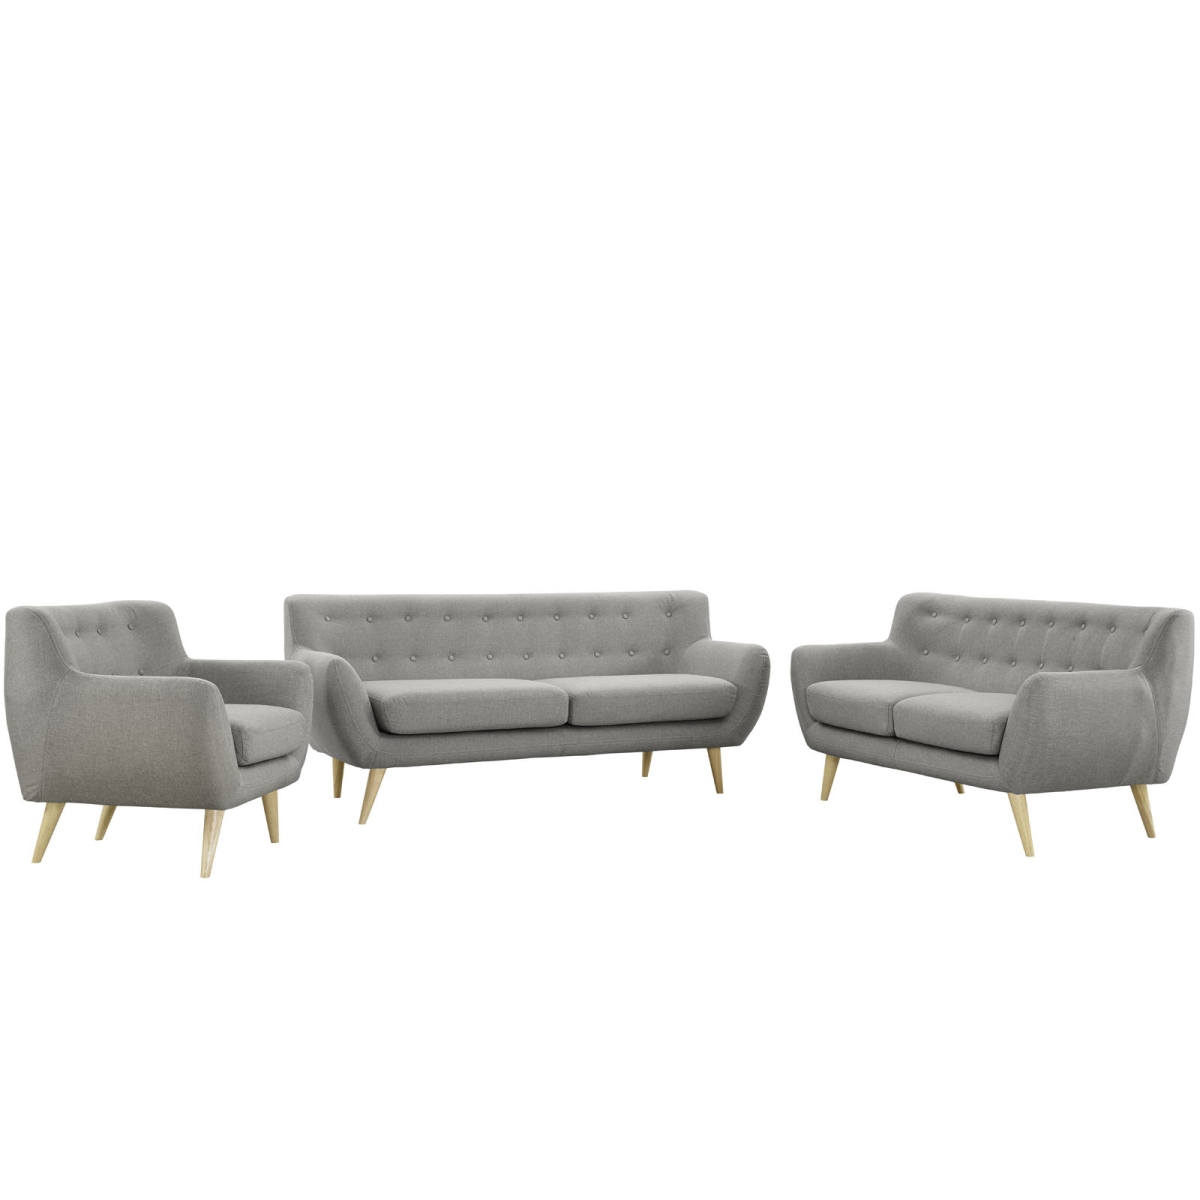 Eastend Eei-1782-lgr-set Remark Sofa, Loveseat & Armchair Set In Tufted Light Gray Fabric On Natural Wood Legs